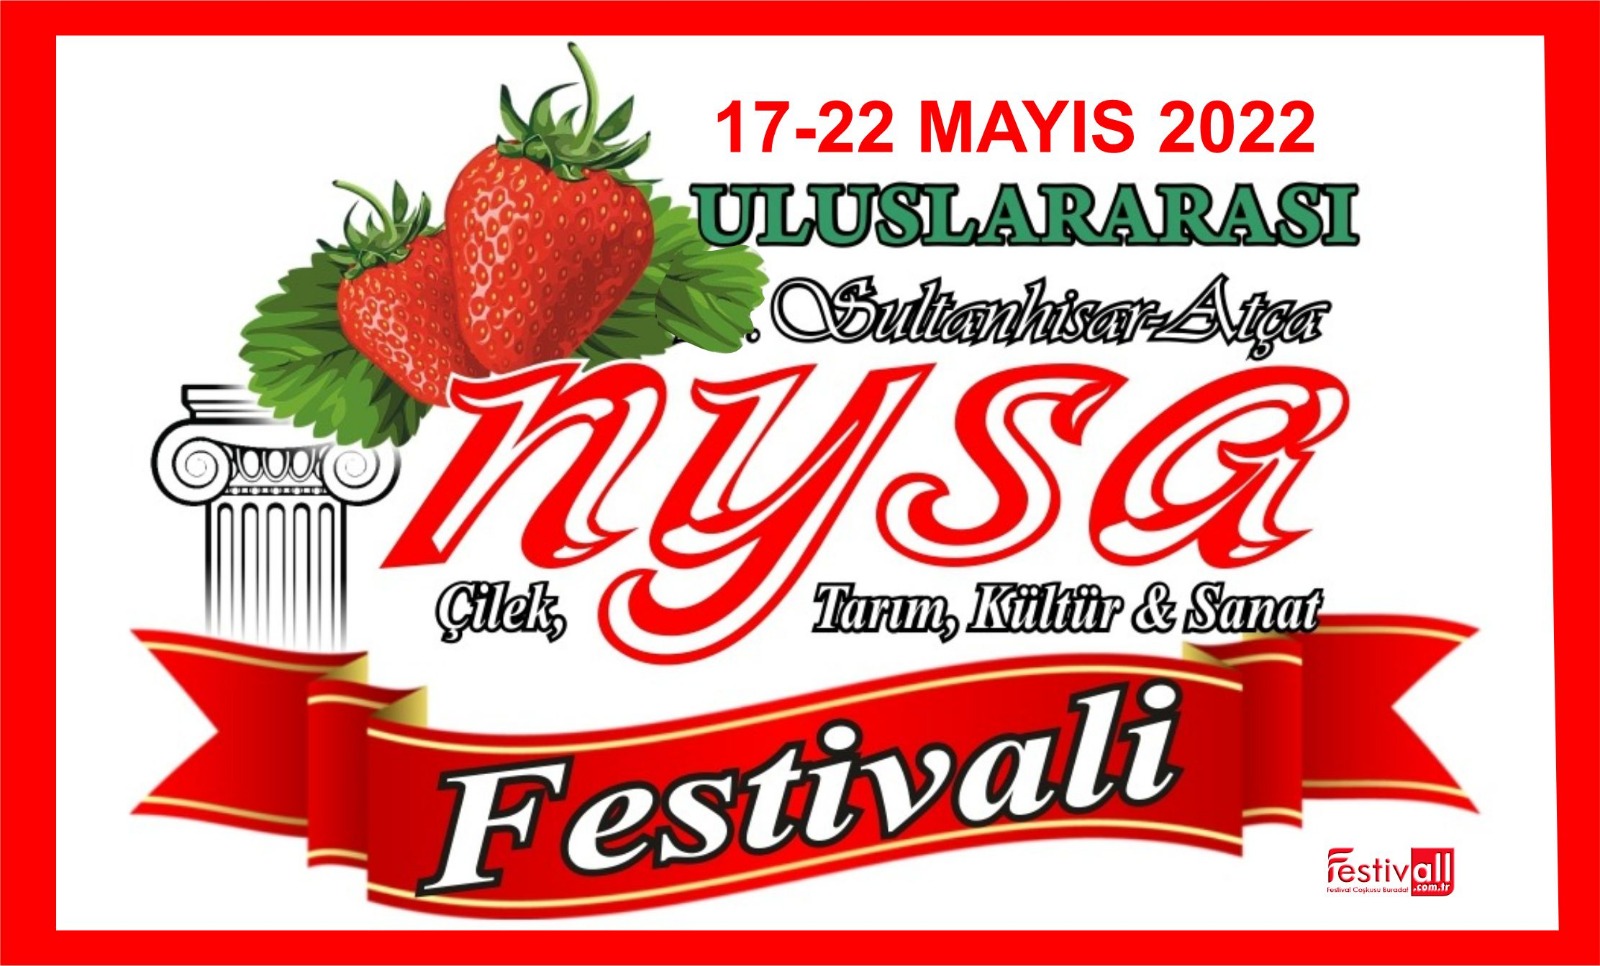 uluslararasi-sultanhisar-atca-nysa-cilek-tarim-kultur-ve-sanat-festivali-1737